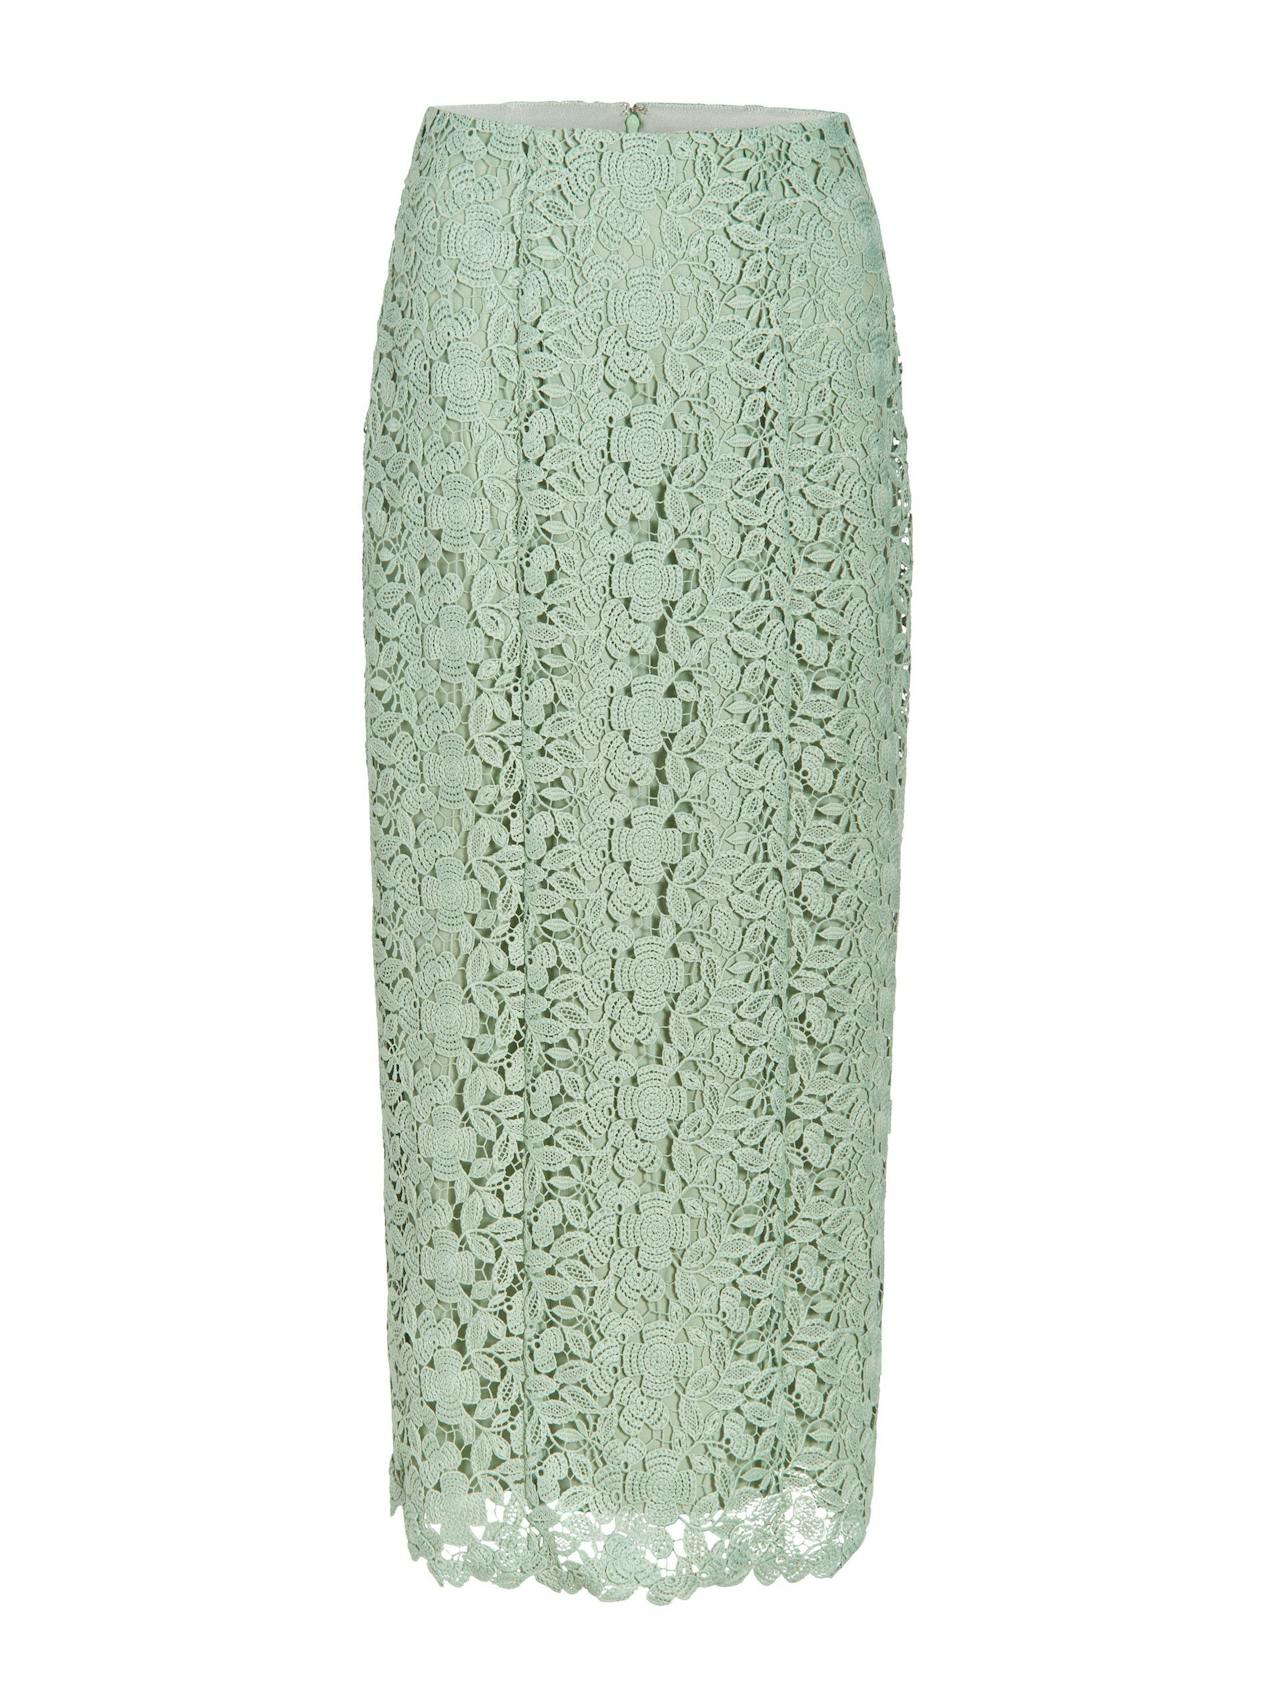 Green crochet lace Tammy skirt with back slit